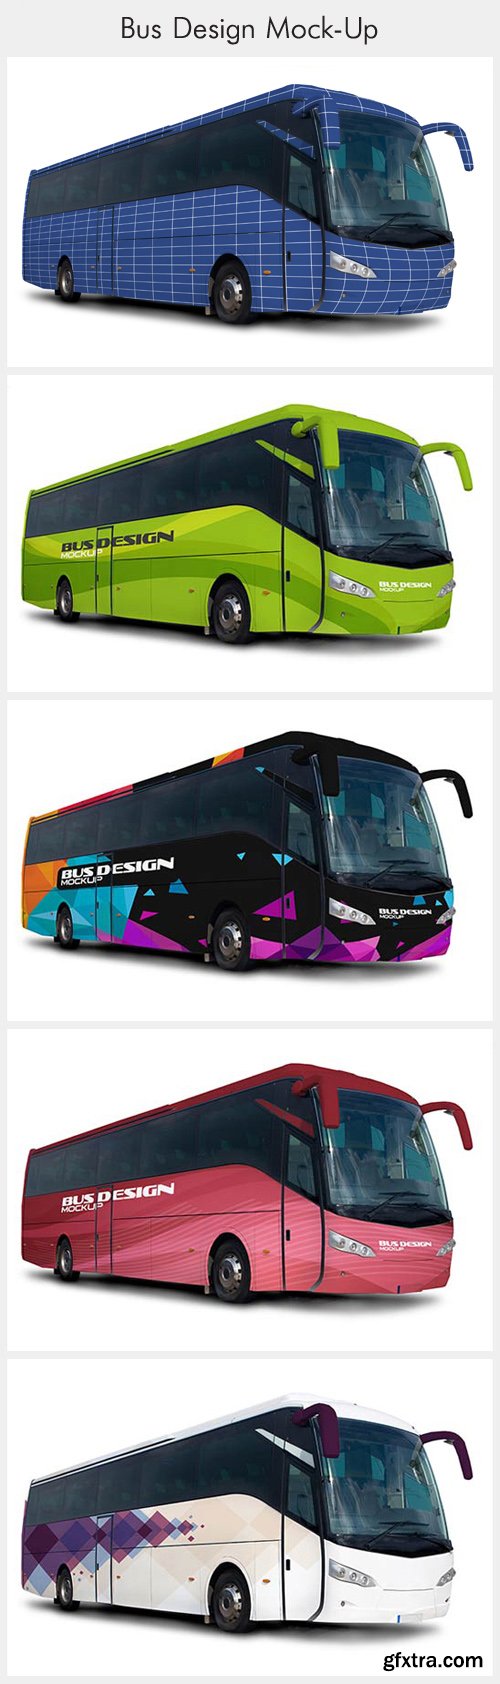 Bus Design Mockup Psd